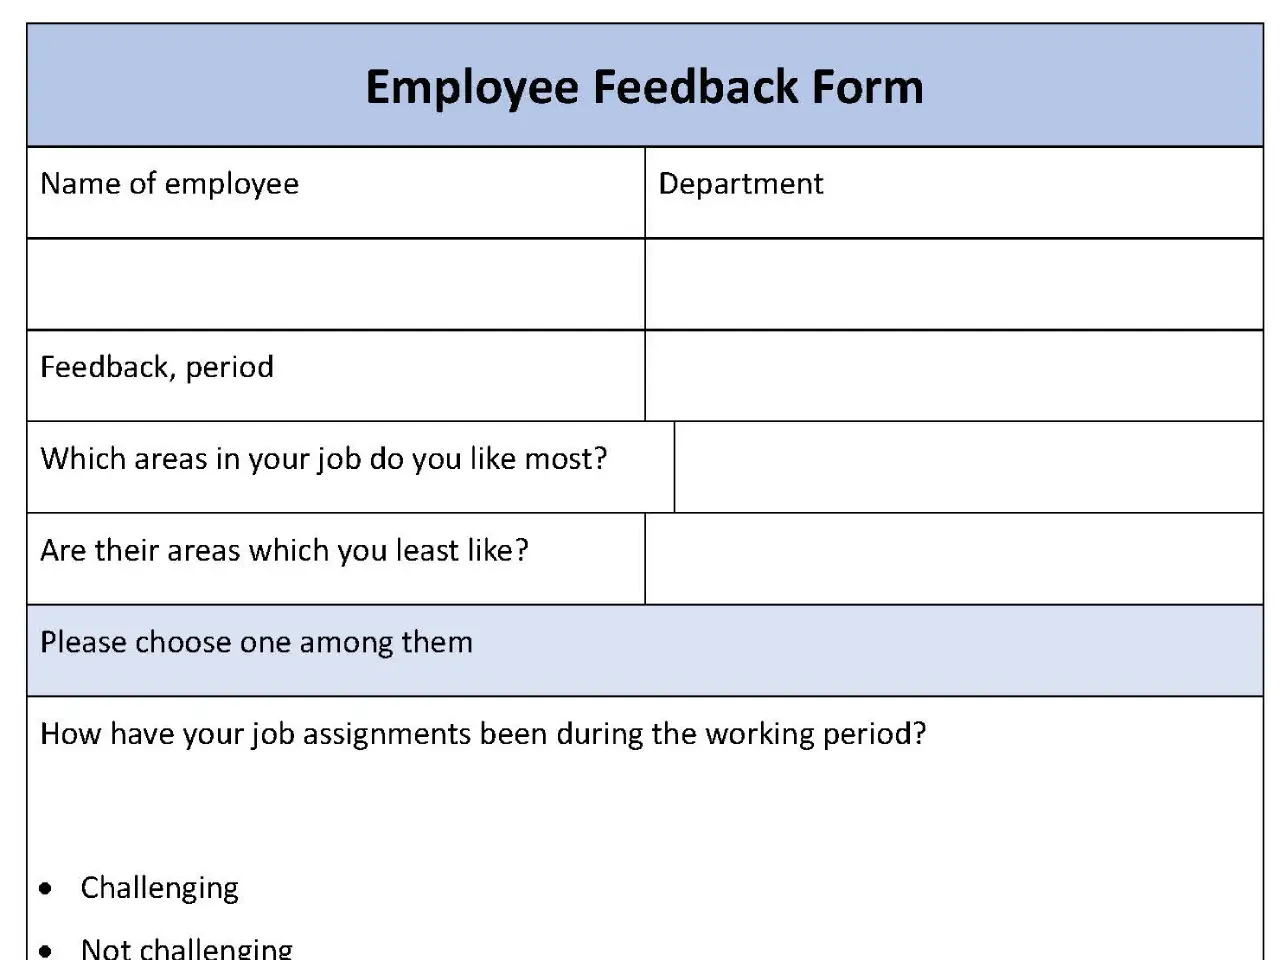 Sample Employee Feedback Form